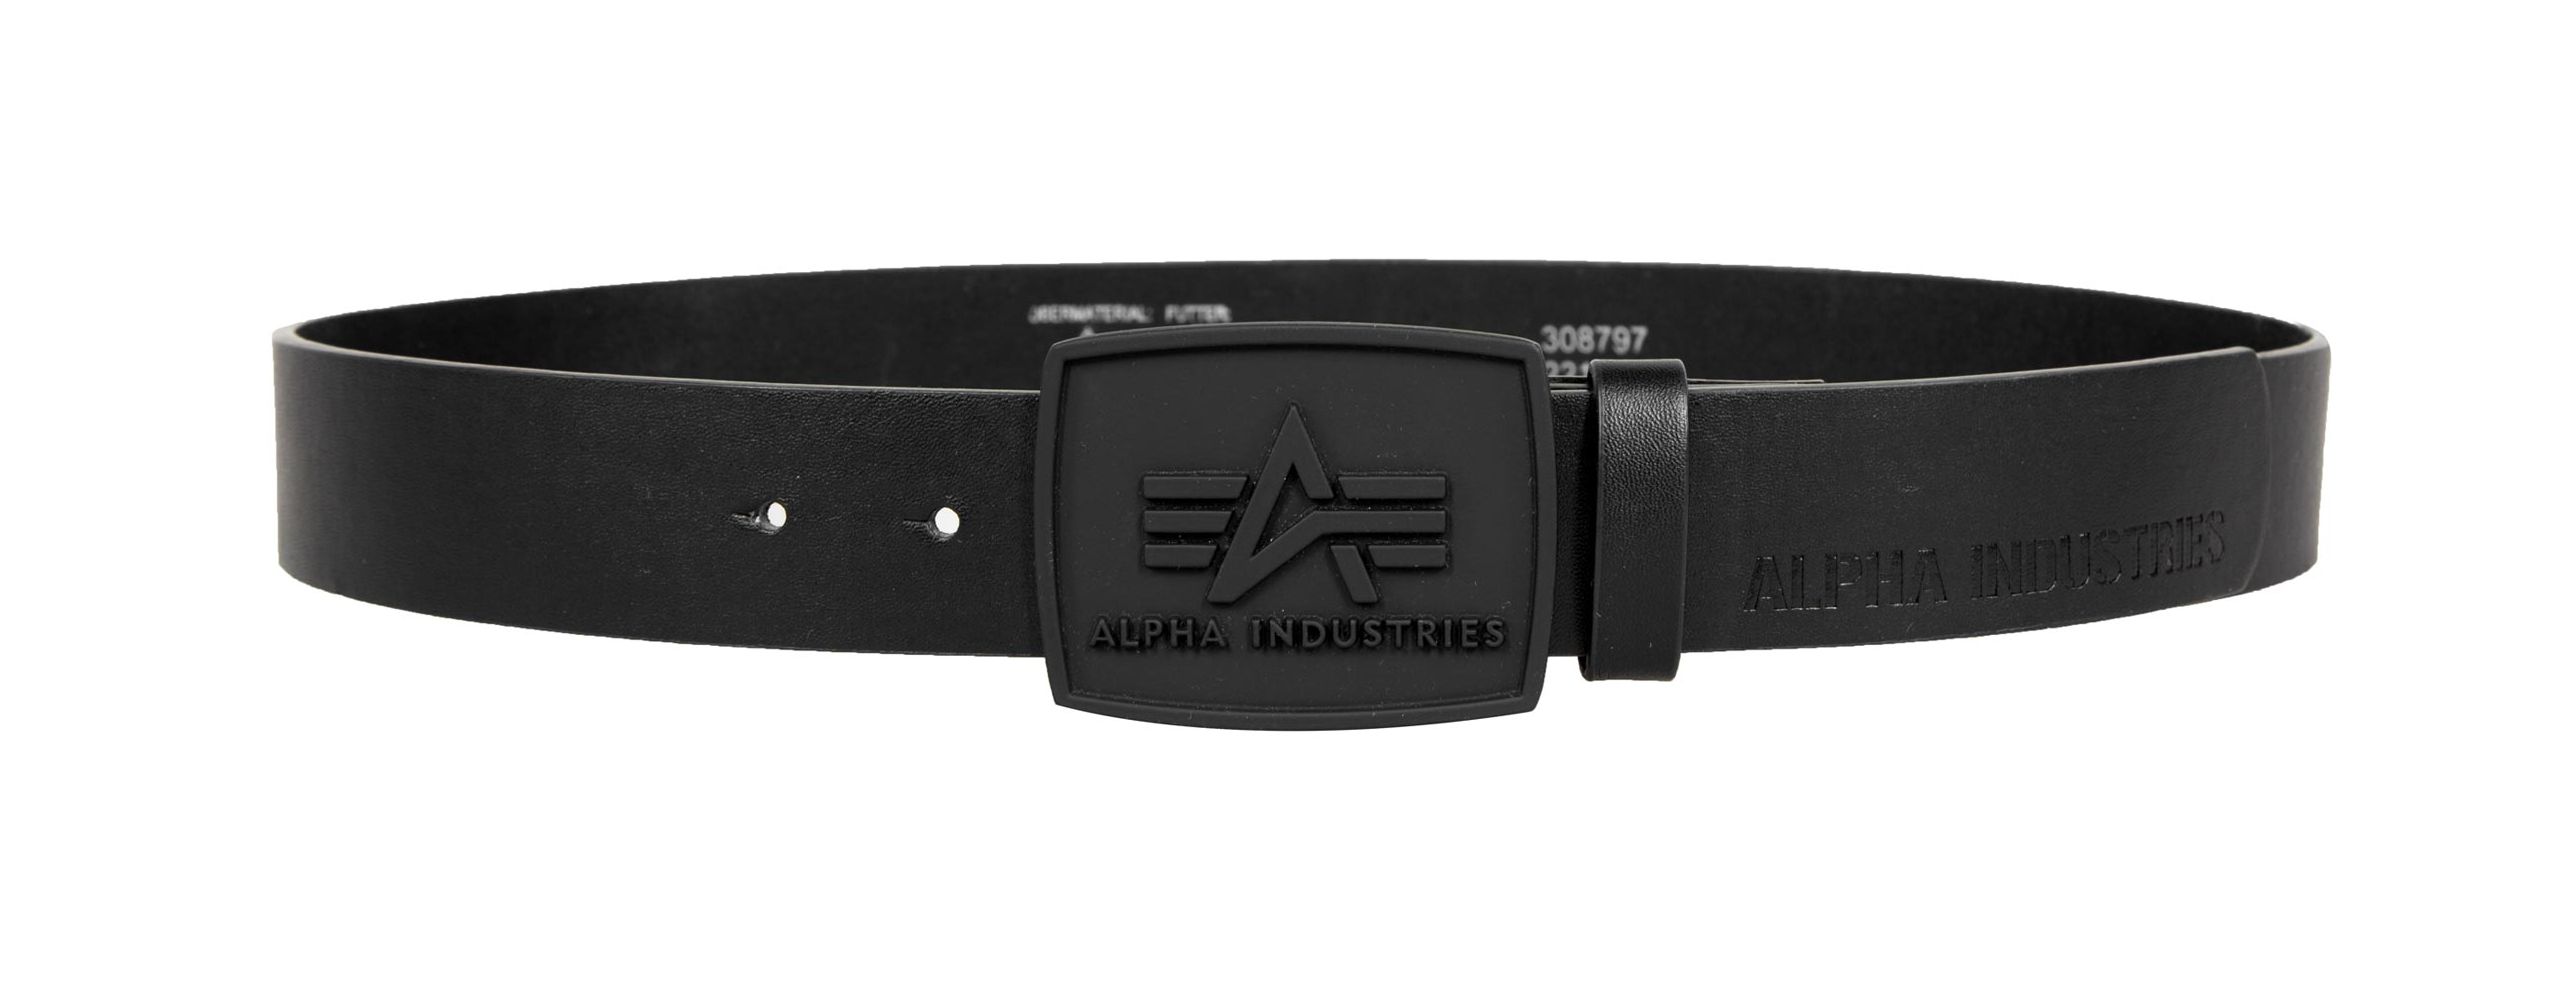 Alpha Industries All Black Belt Gürtel Black | Belts / Buckles | Men |  Lifestyle